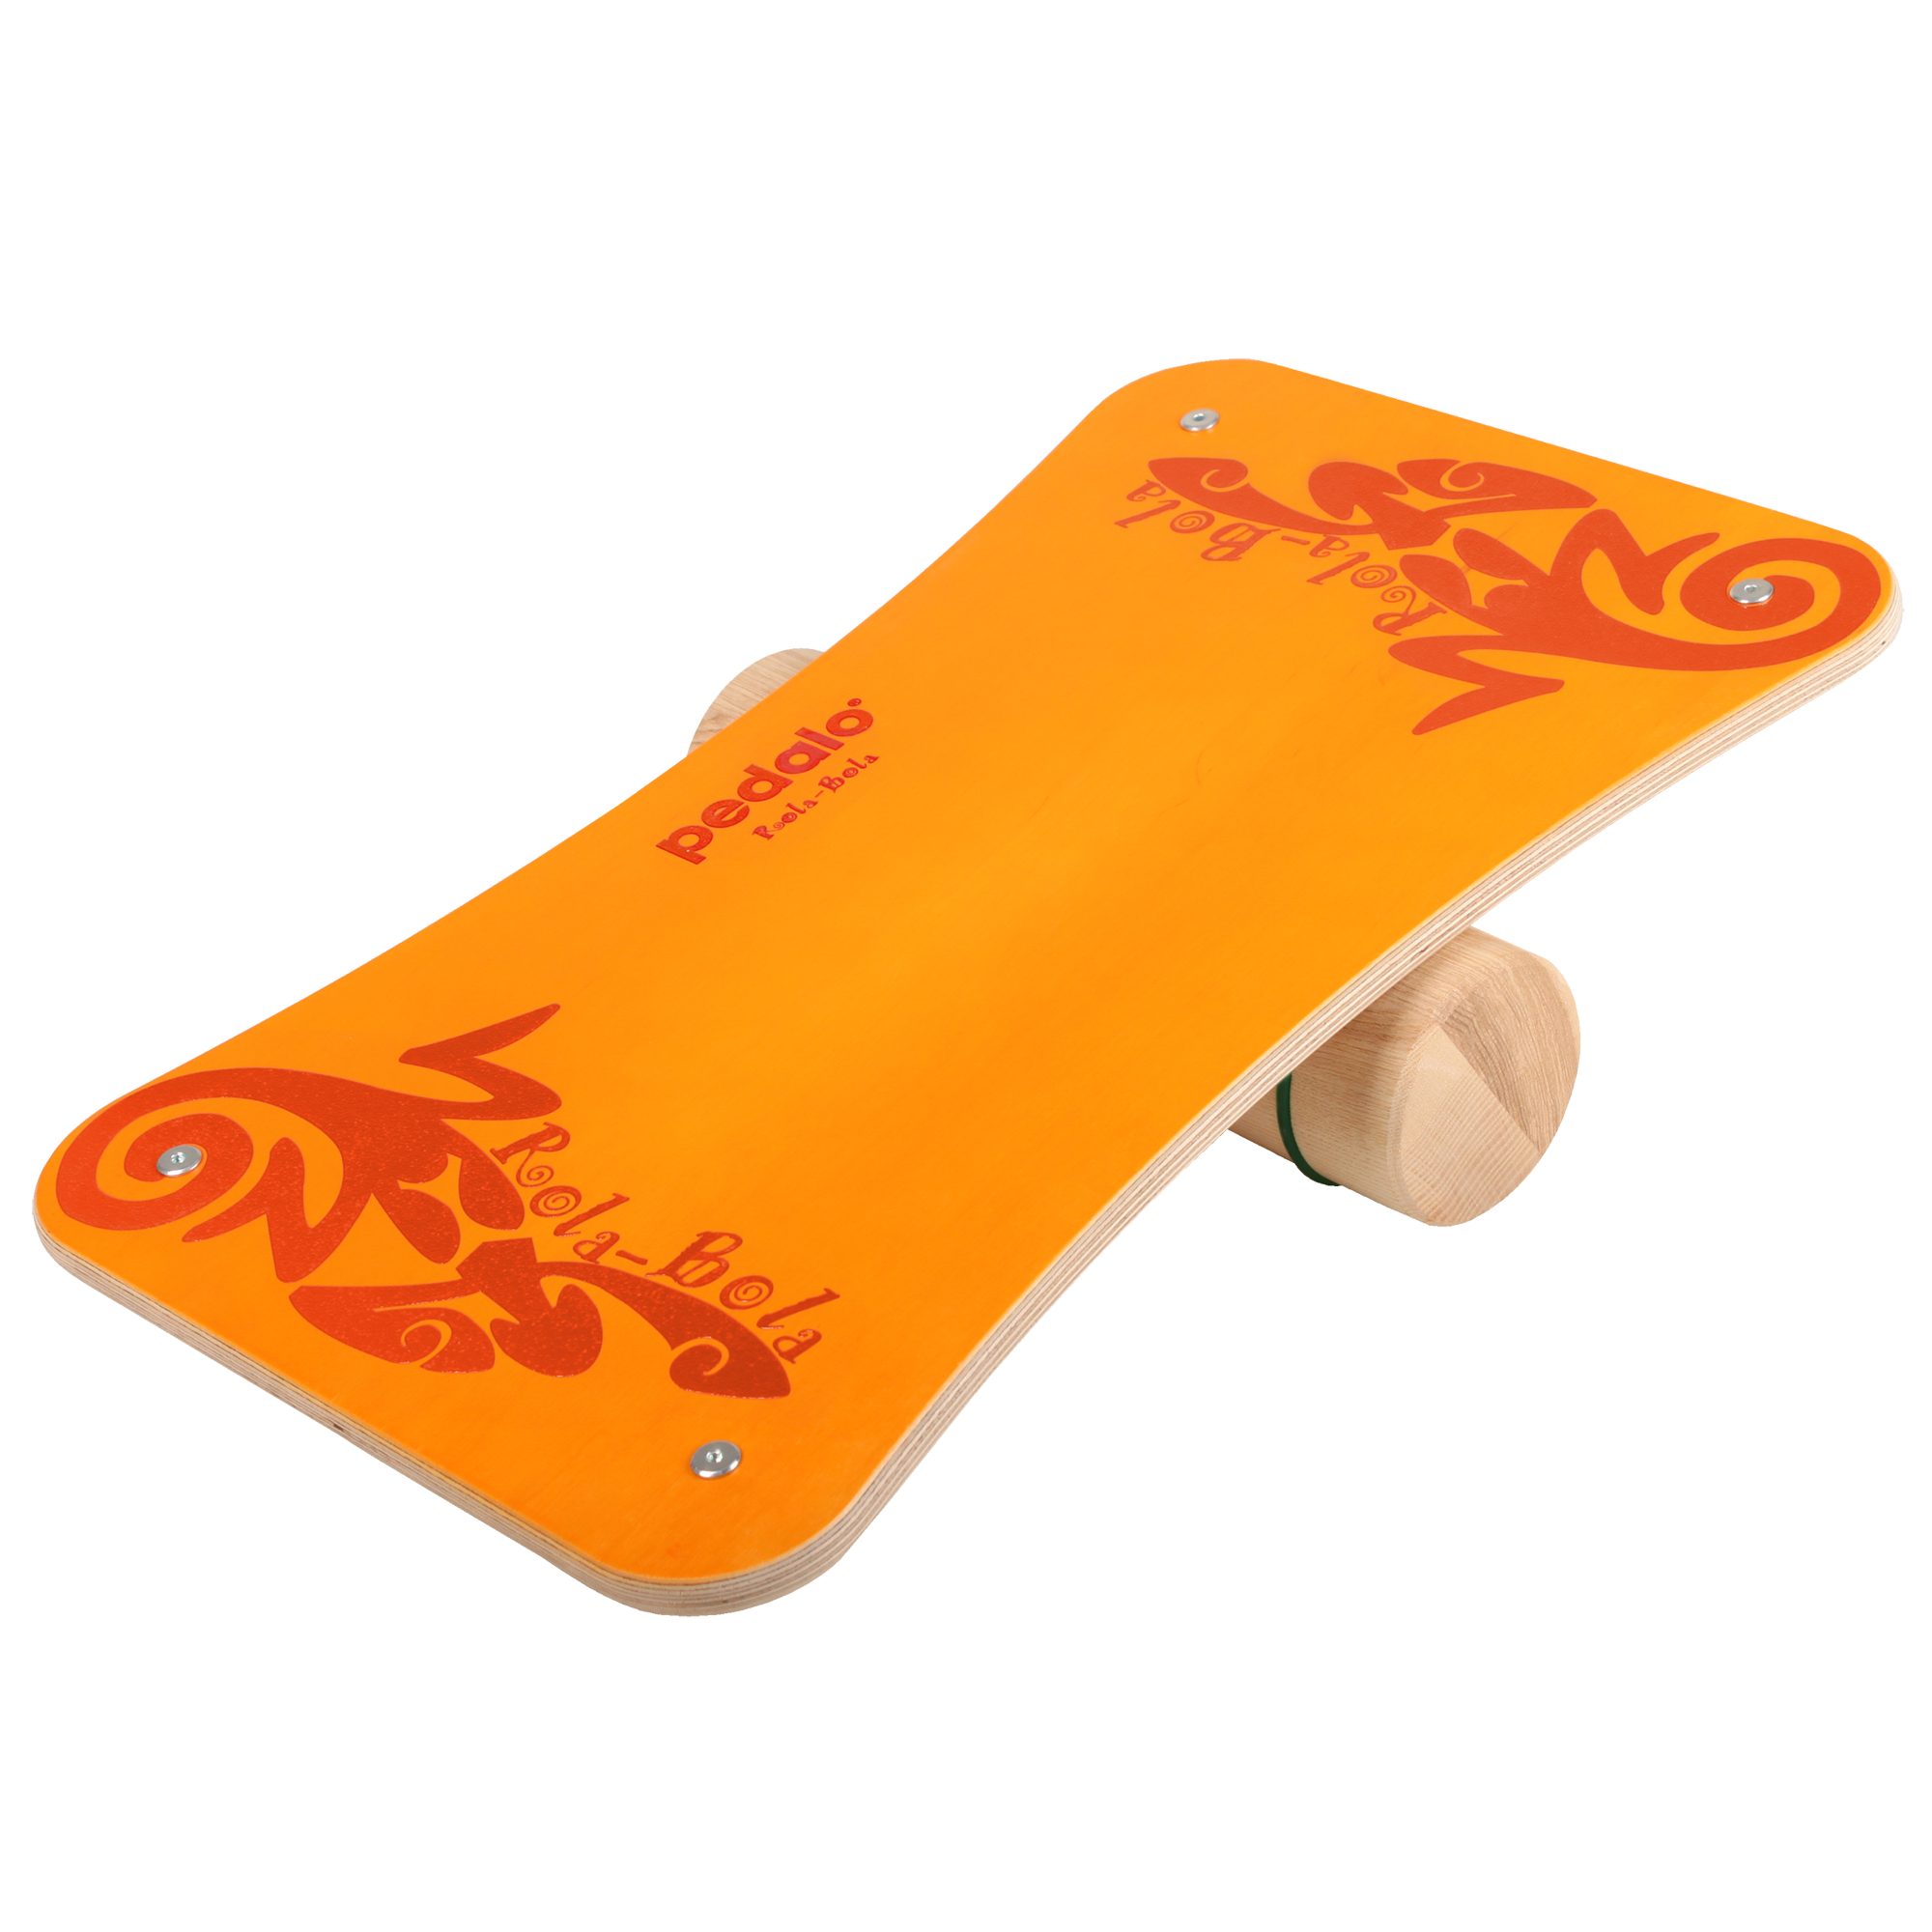 pedalo® Balanceboard Pedalo orange Gleichgewichtstrainer, Rola-Bola Balanceboard, Reflextrainer